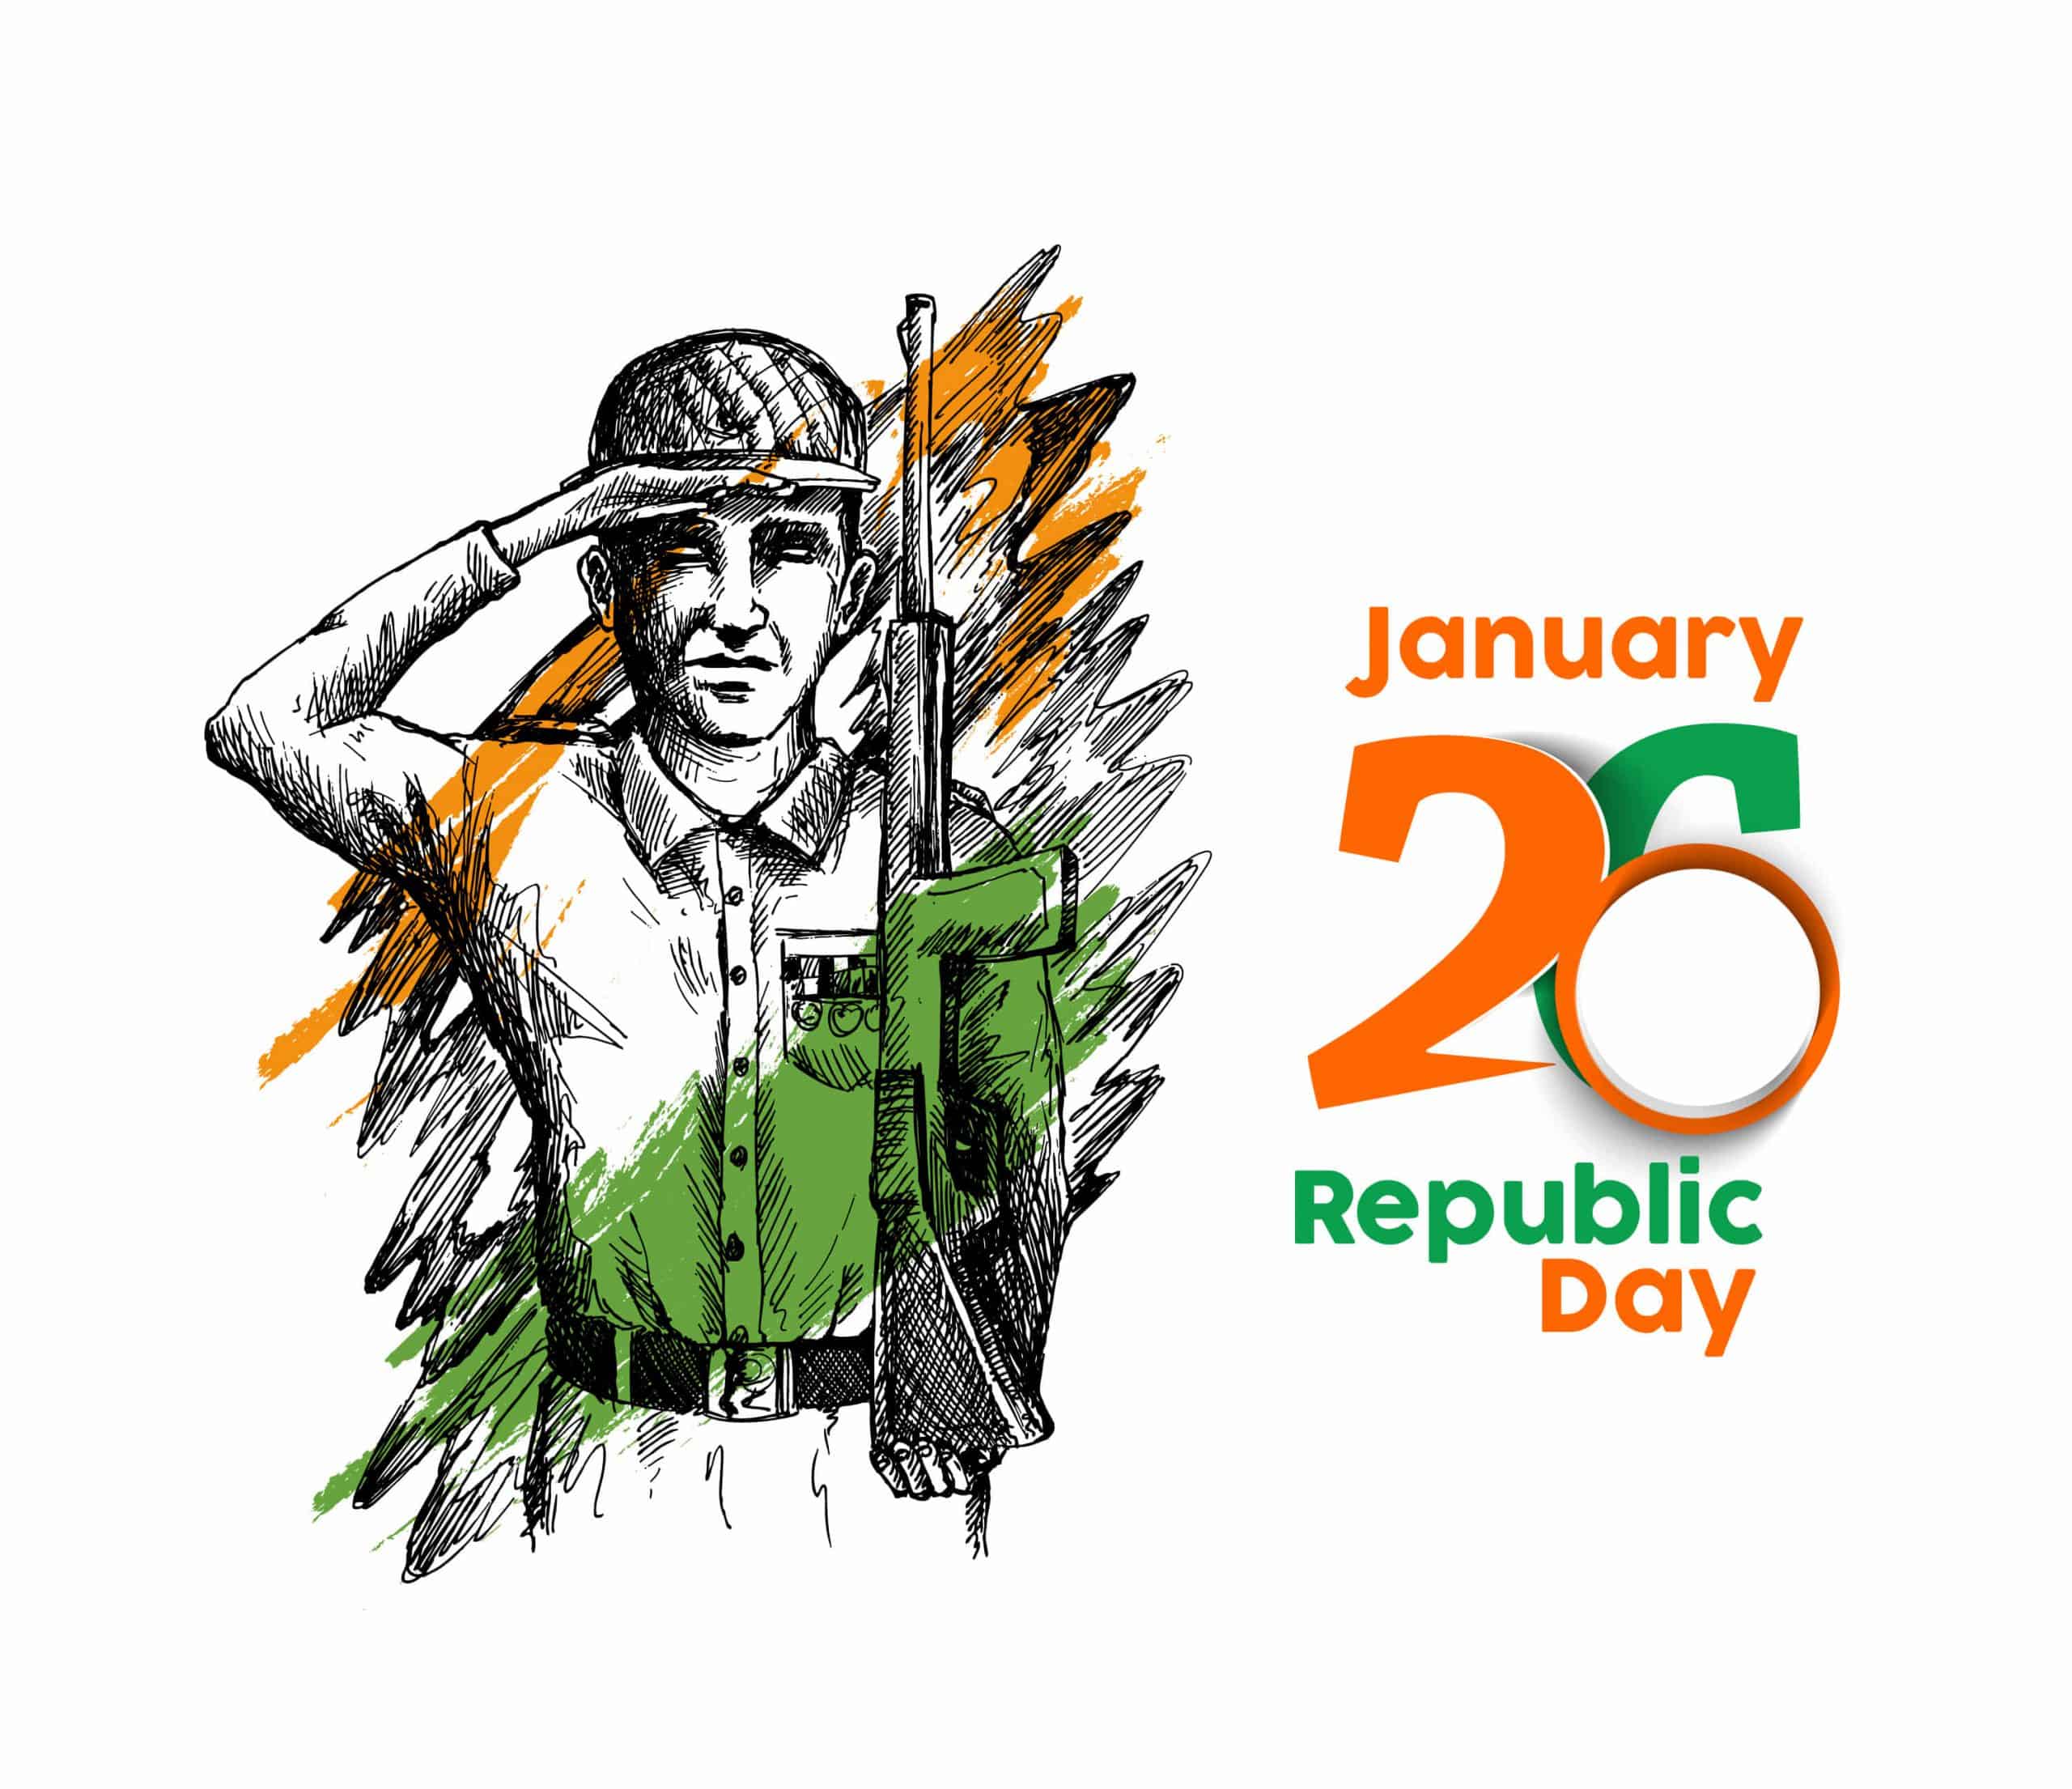 India Republic Day Images